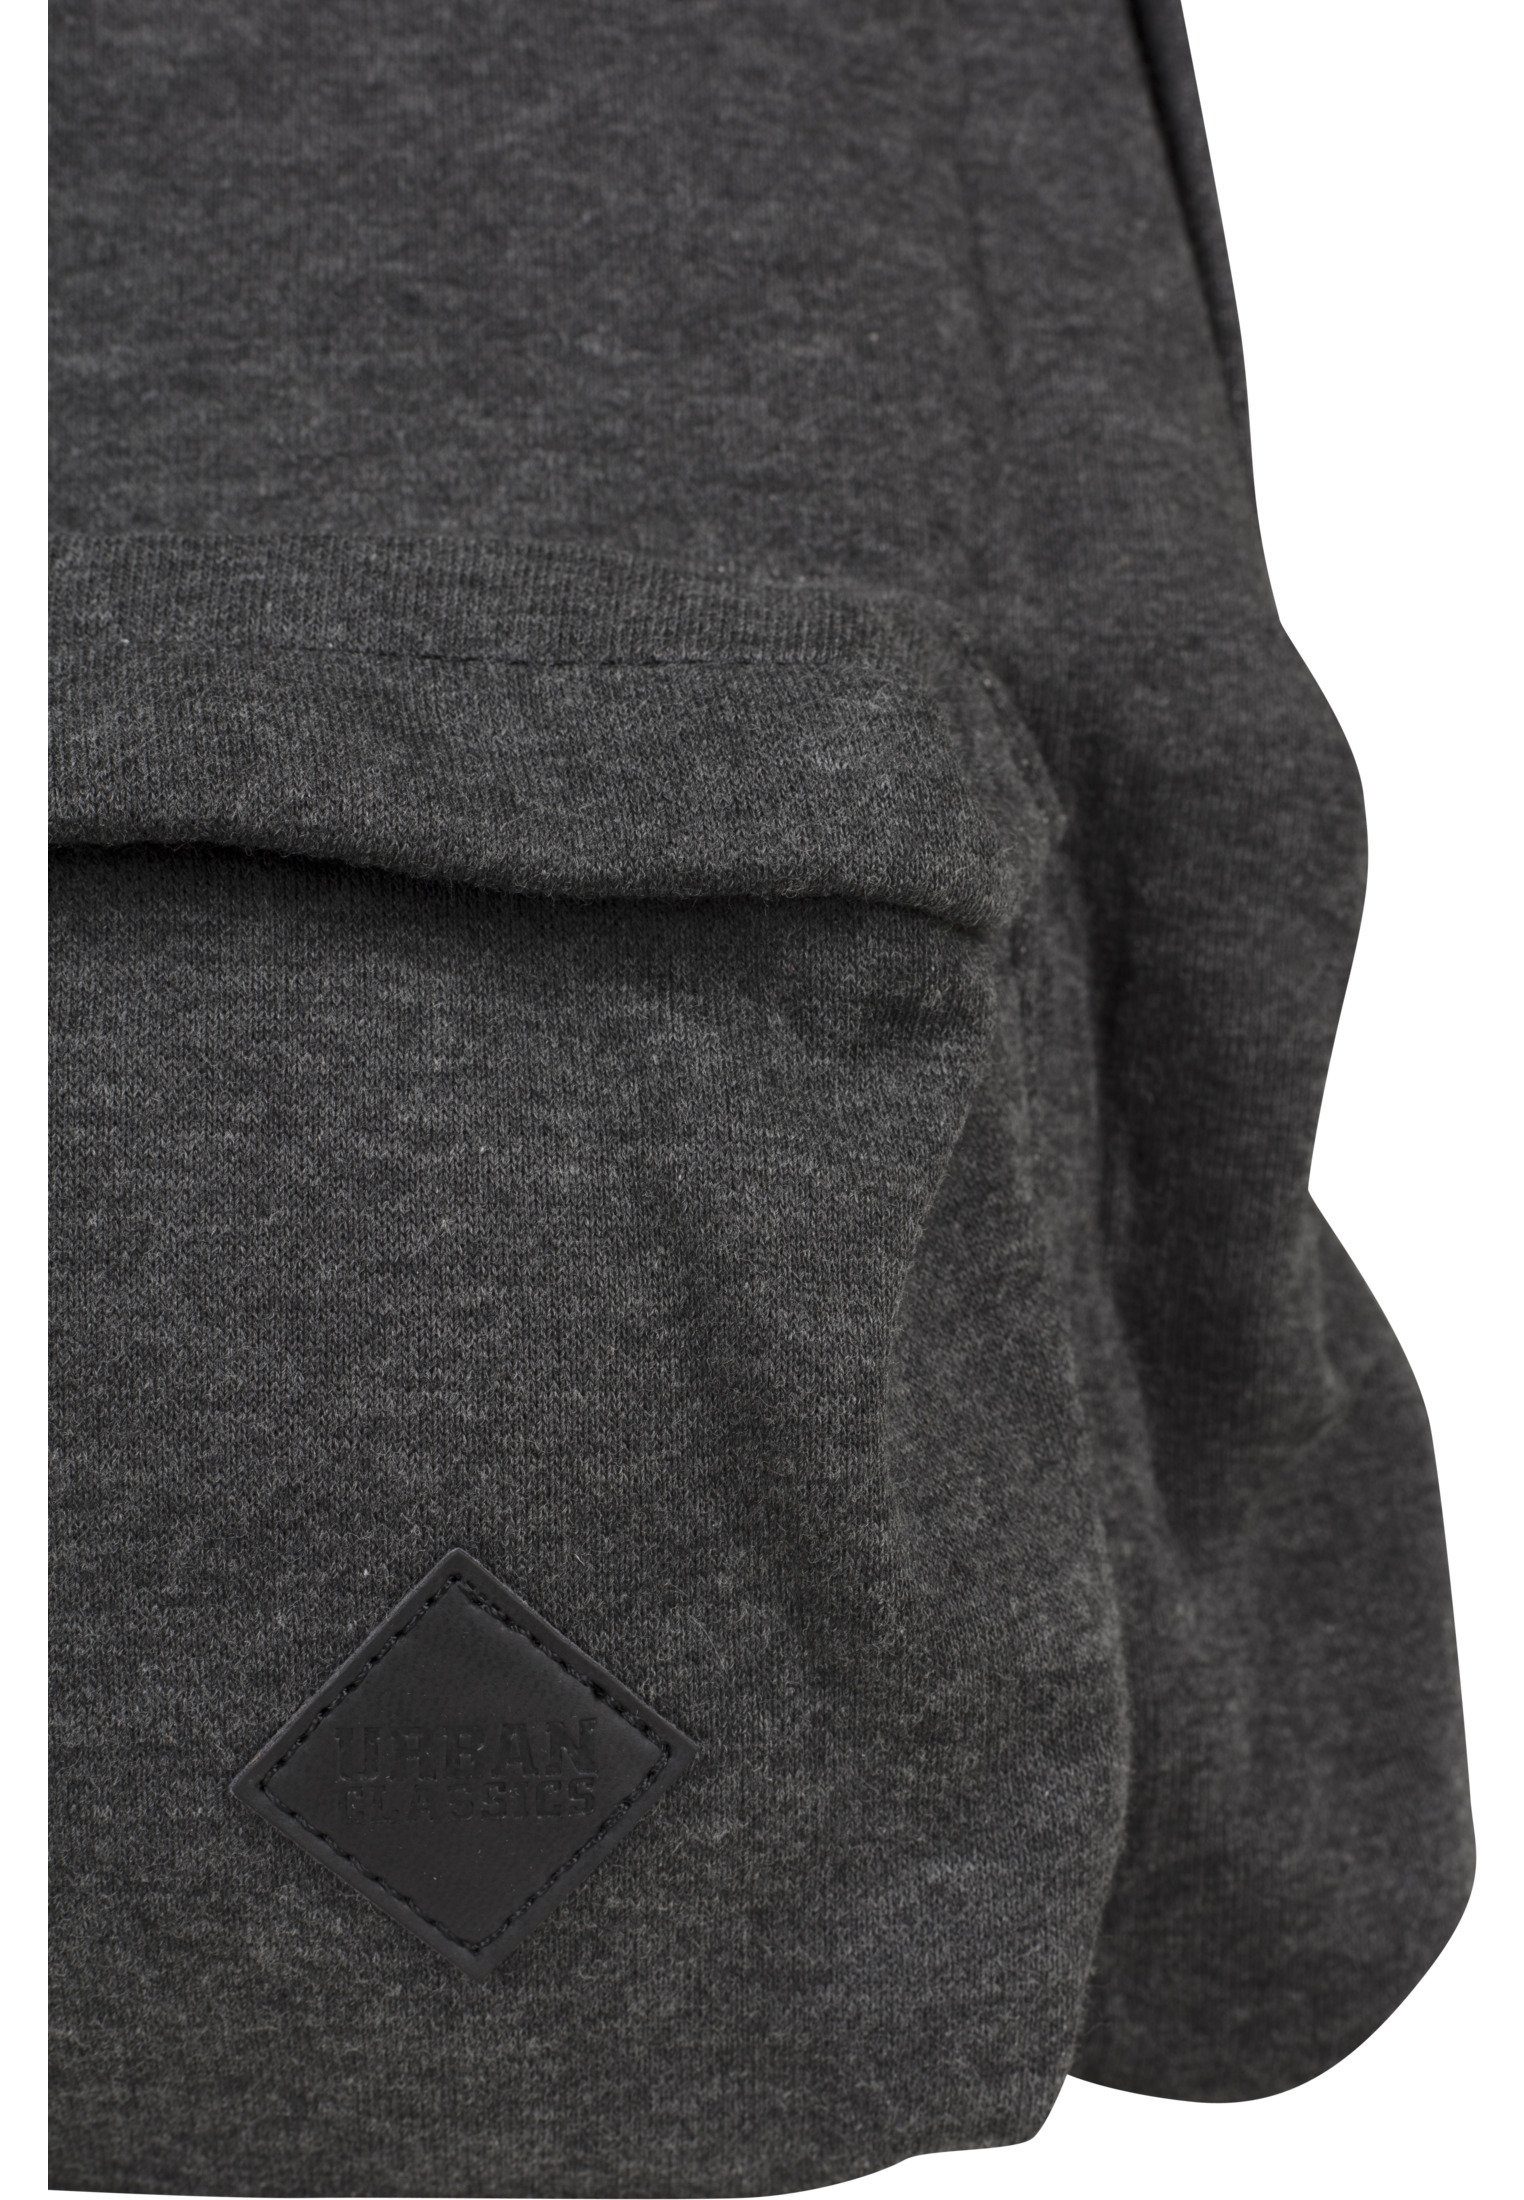 Rucksack Unisex URBAN Backpack Sweat charcoal/black CLASSICS